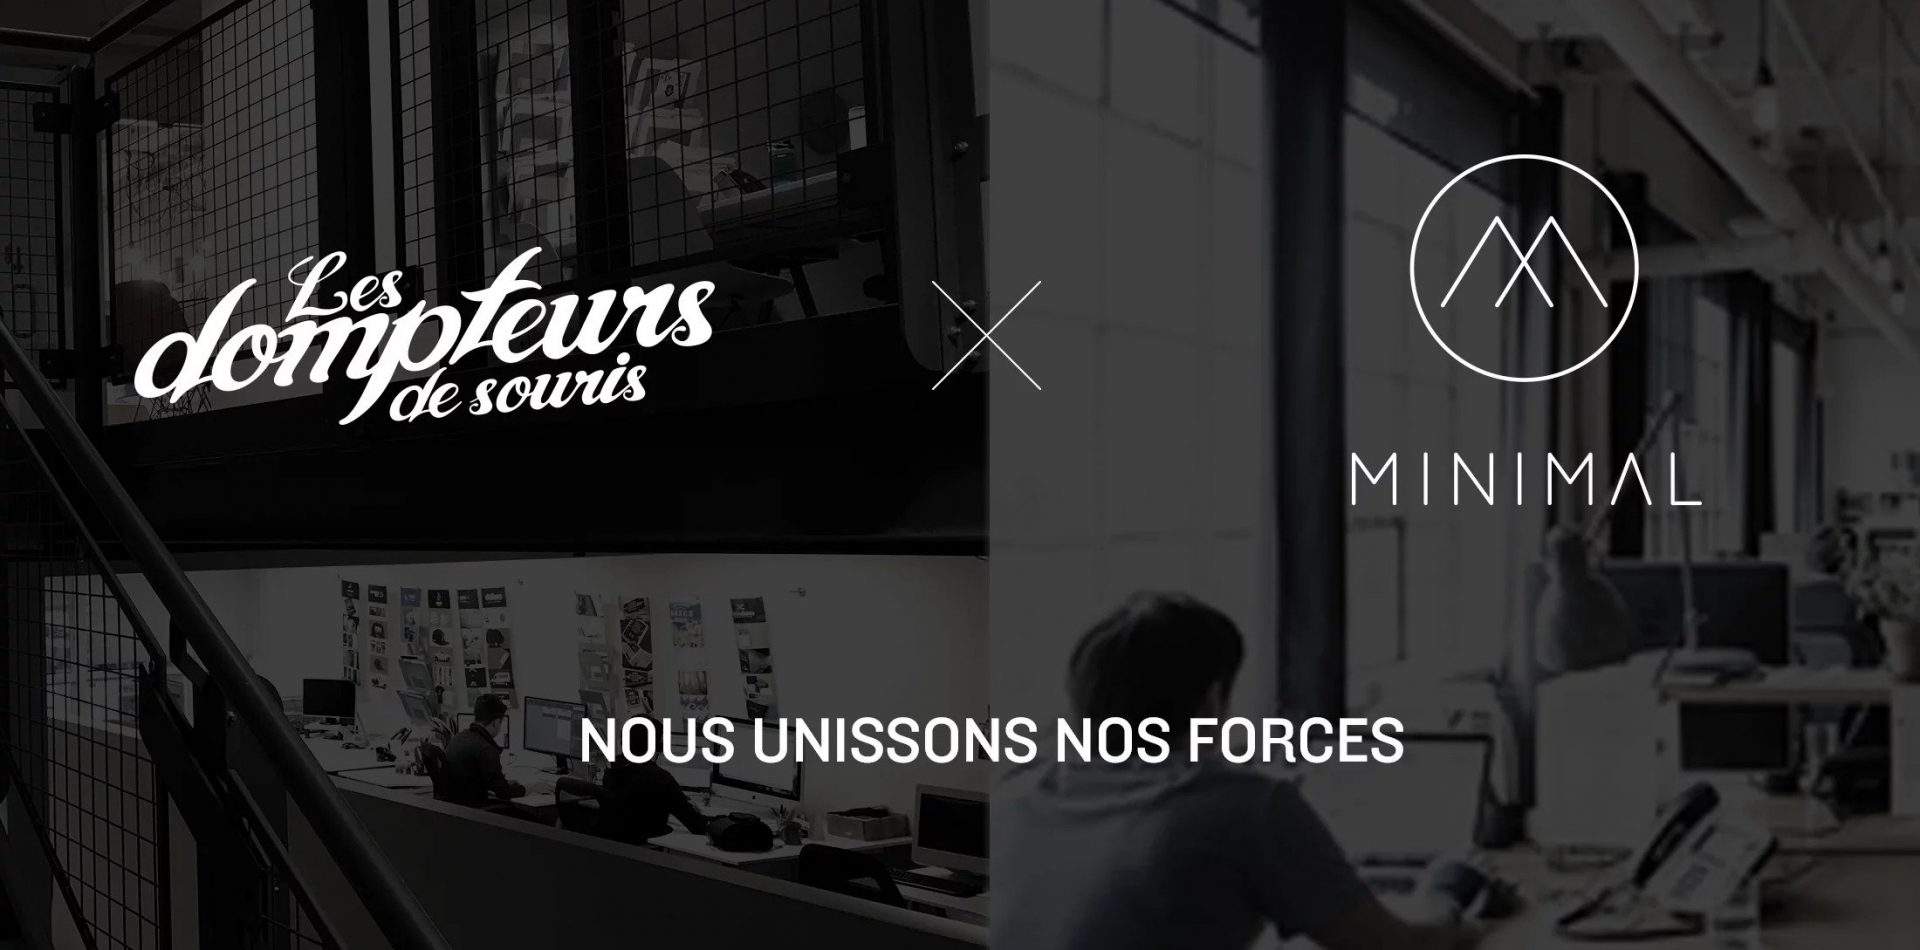 , Advertising Agencies Minimal and Les Dompteurs de souris to Join Forces, Minimal